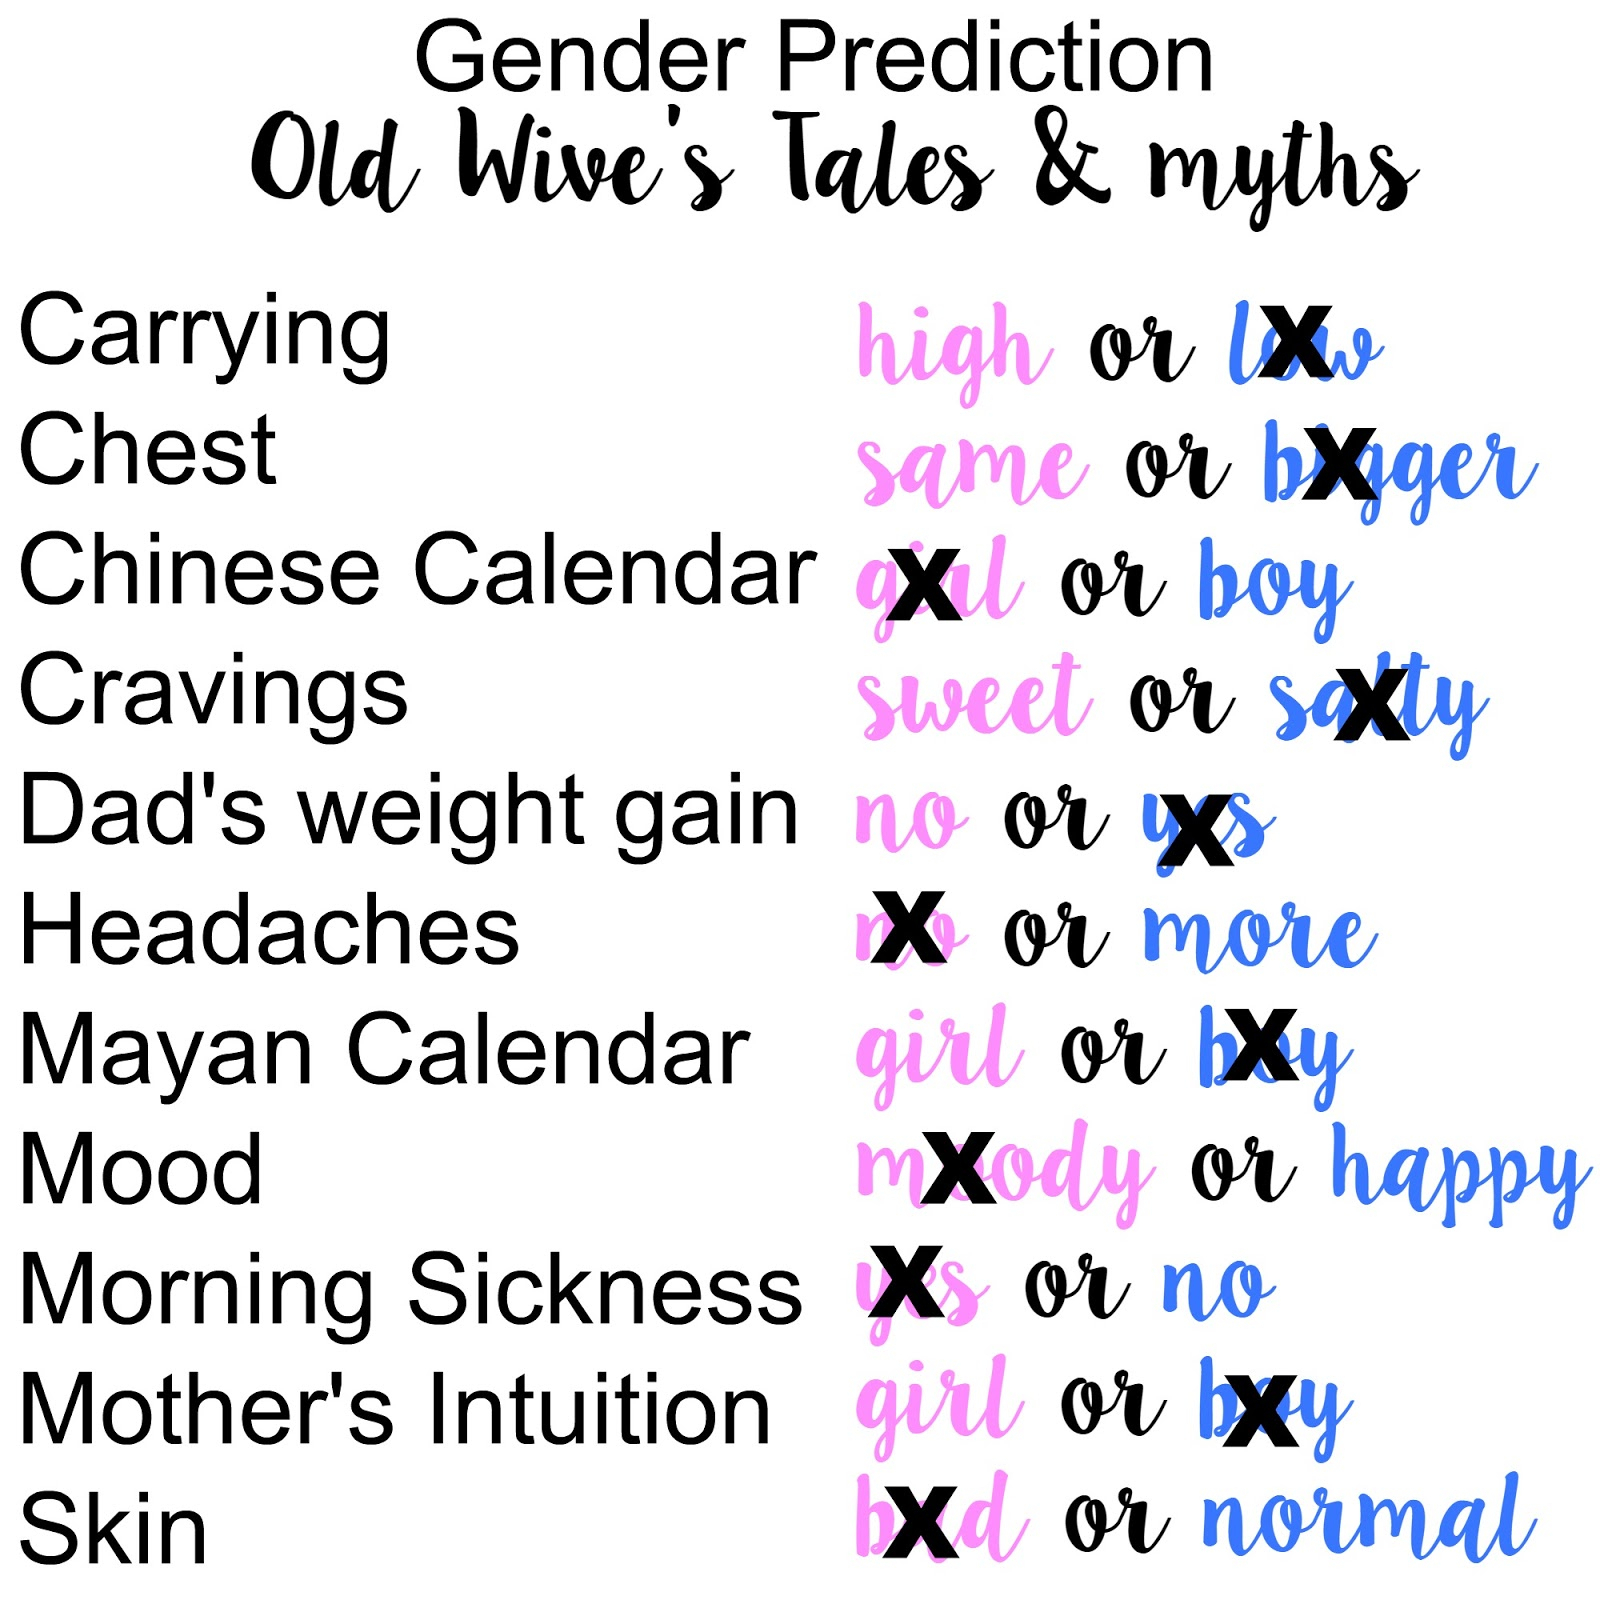 Buy Gender Prediction Myths in Mayan Gender Predictor